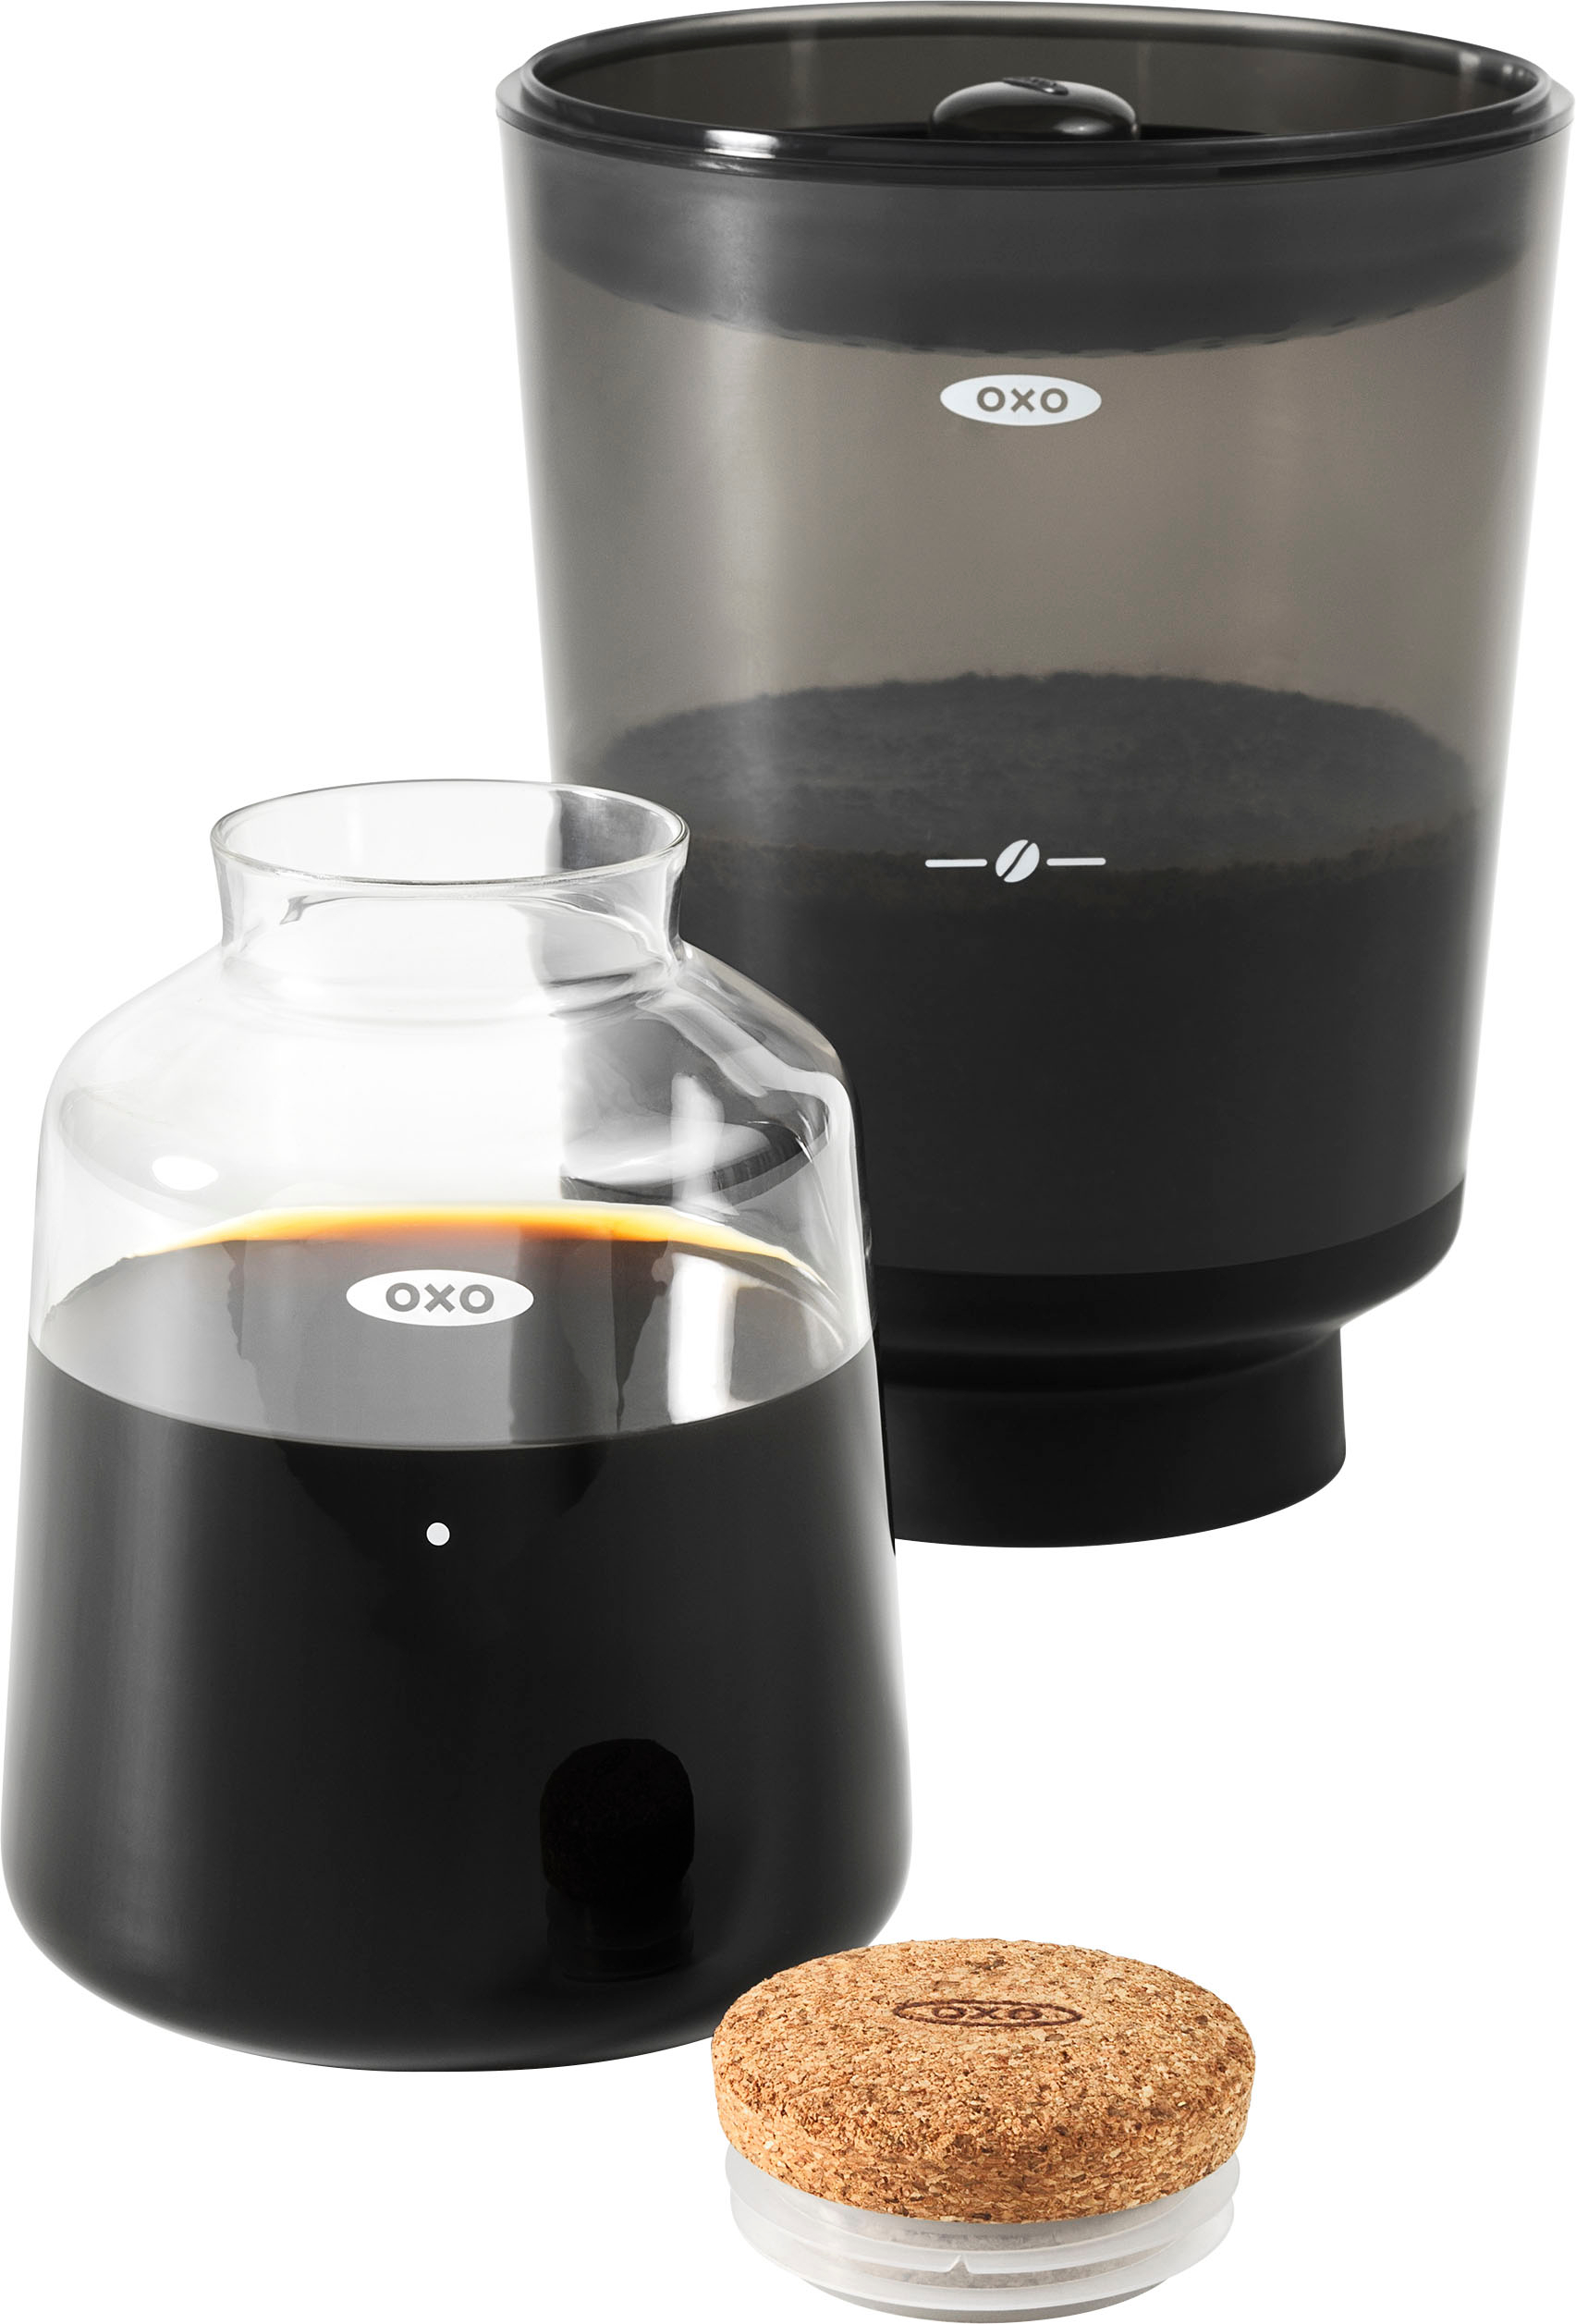 Best Buy: Gourmia Cold Brew Coffee Maker Black GCM6800